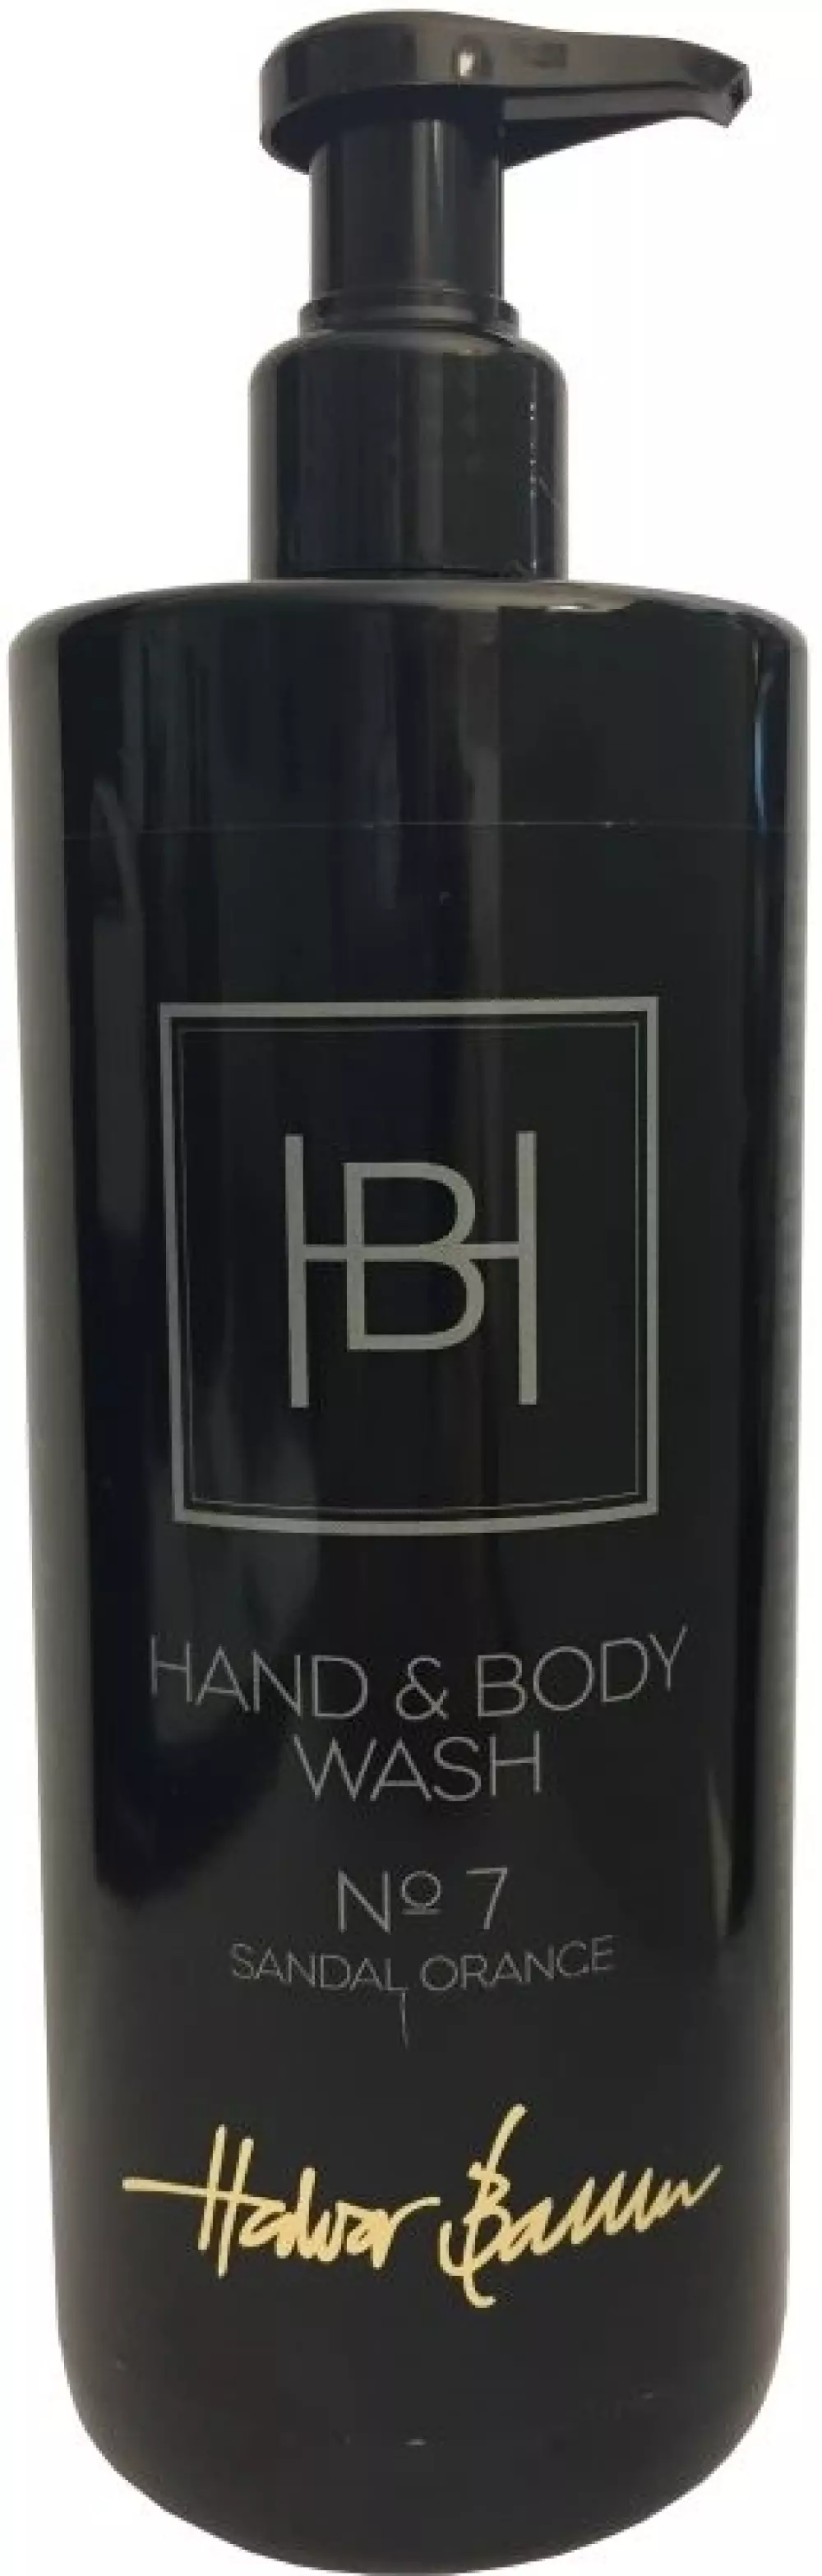 Hand & Bodywash Sandal Orange 500ml, 789011340380, HB700, Baderom, Håndsåper, Halvor Bakke, Terrigeno, Hand & Bodywash NO7 SANDAL ORANGE